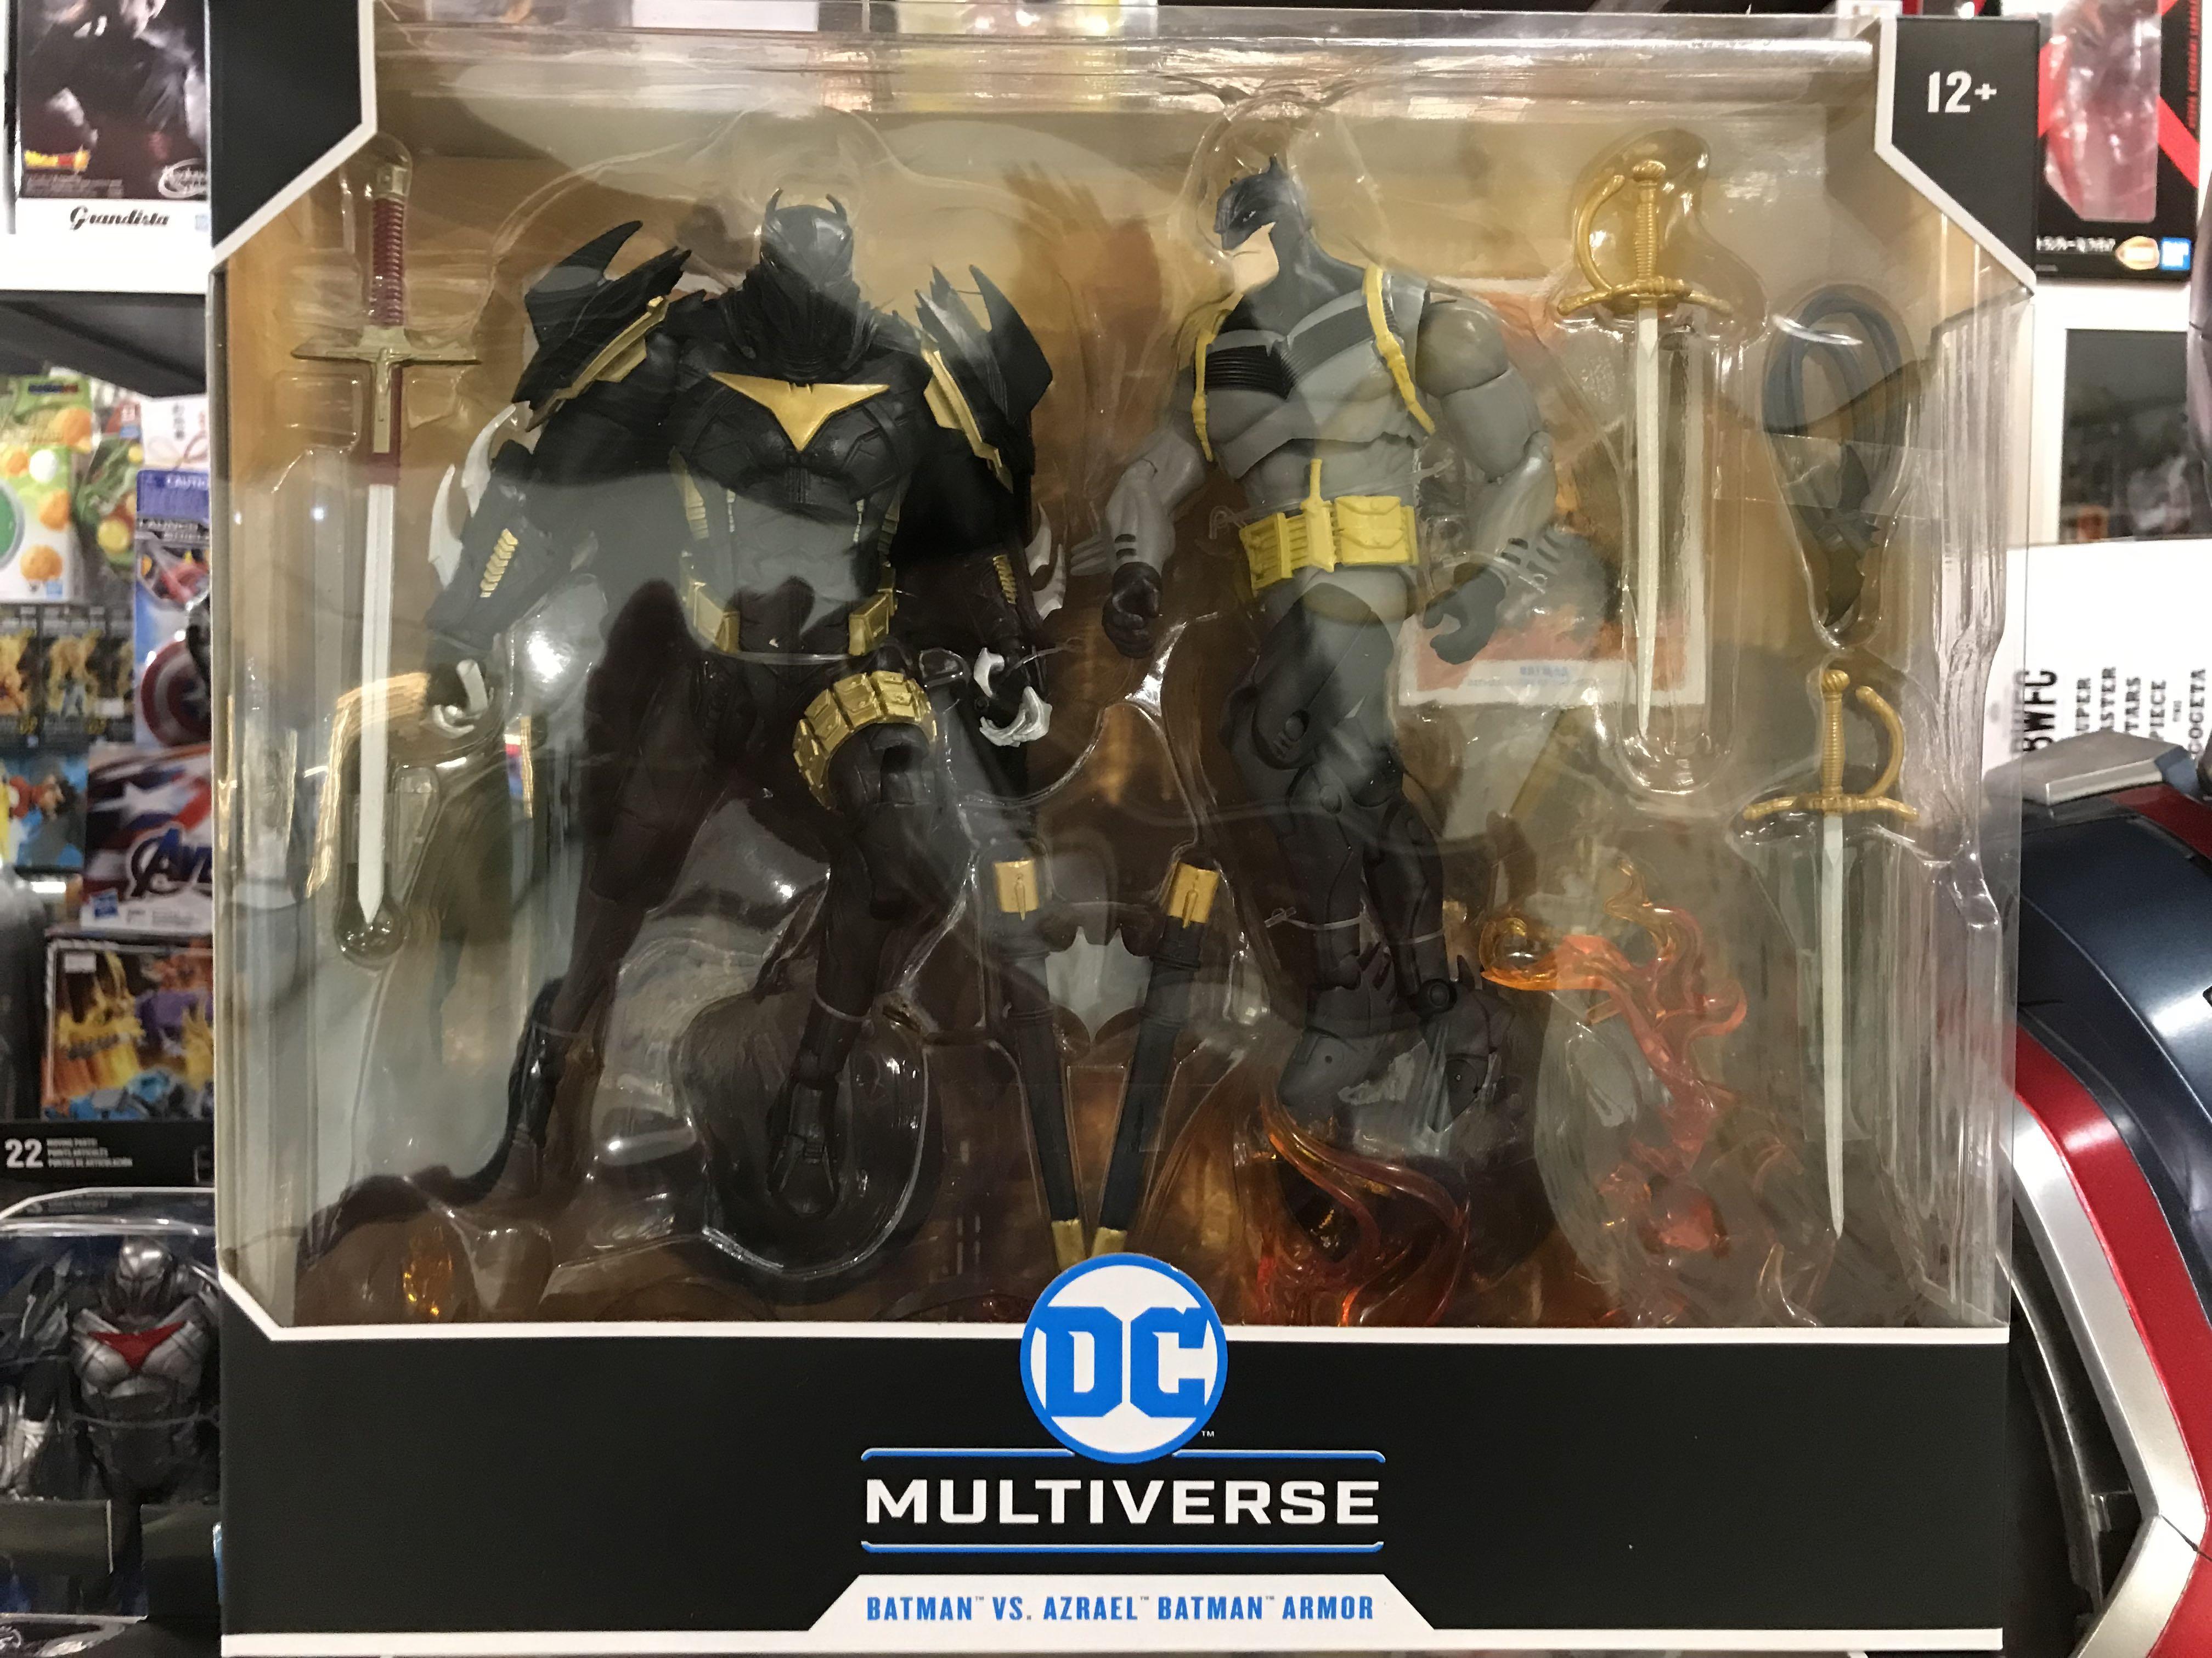 Mcfarlane Toys DC Multiverse Batman VS. Azrael Batman Armour Action Figure,  Hobbies & Toys, Collectibles & Memorabilia, Fan Merchandise on Carousell